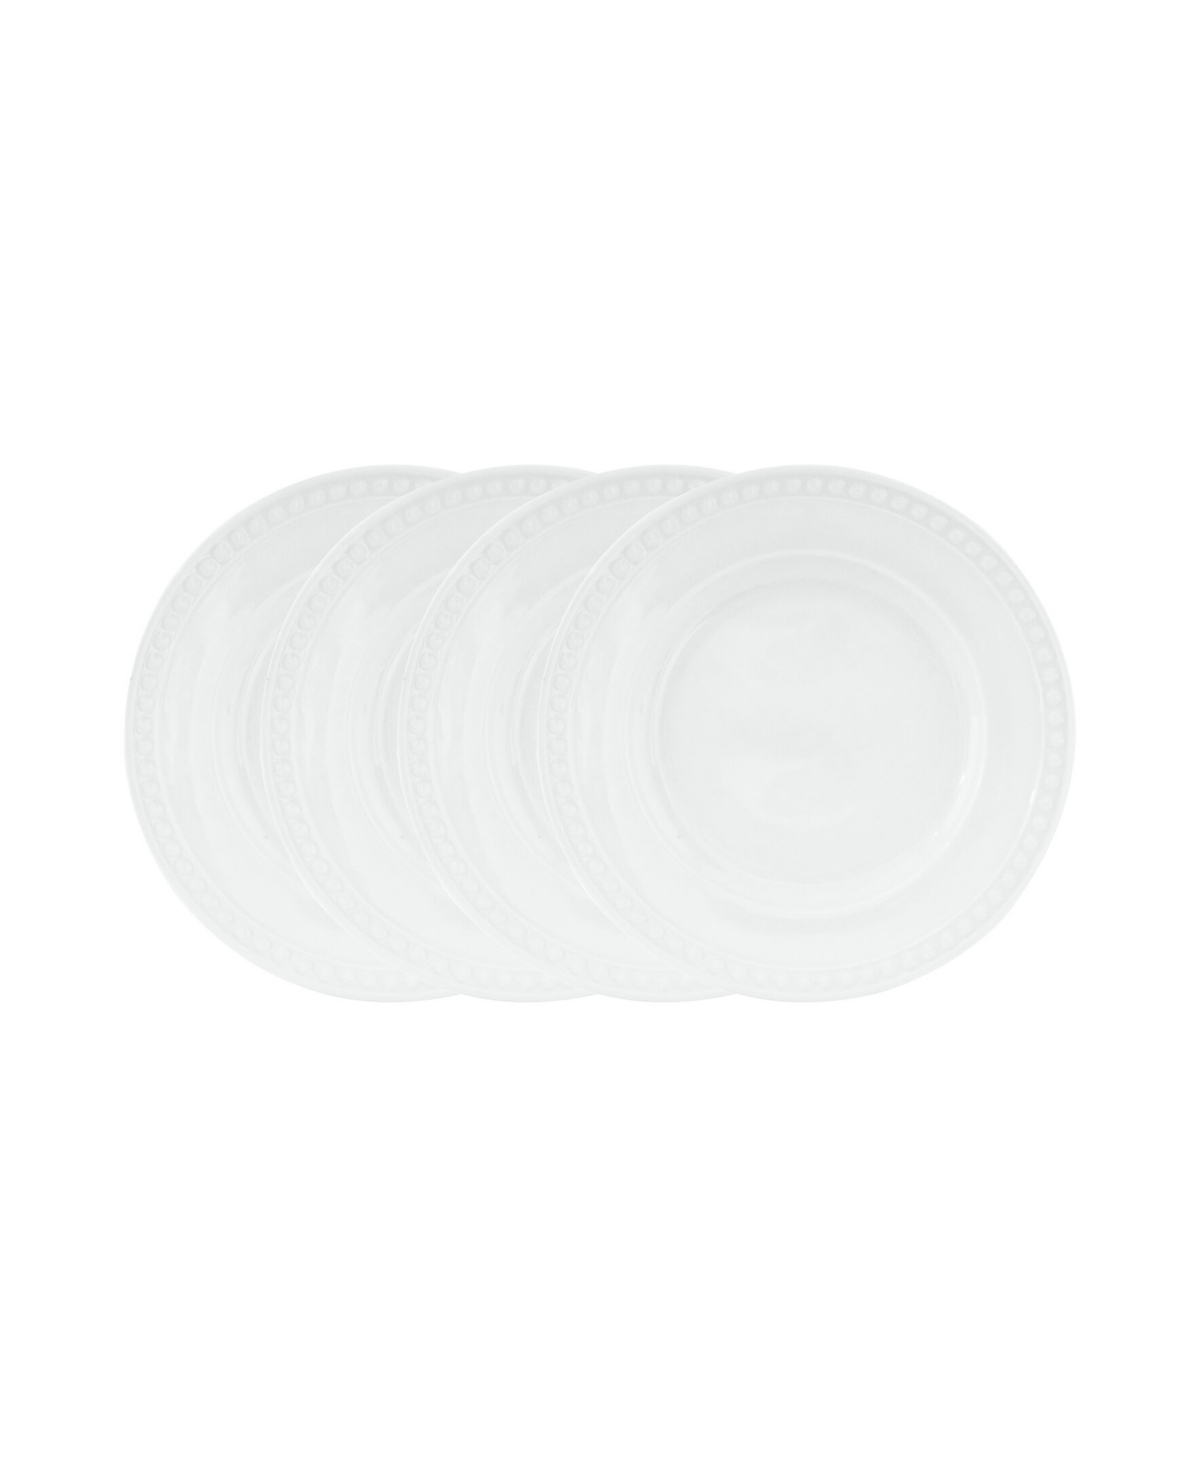 Everyday Whiteware Beaded Salad Plate 4 Piece Set - White